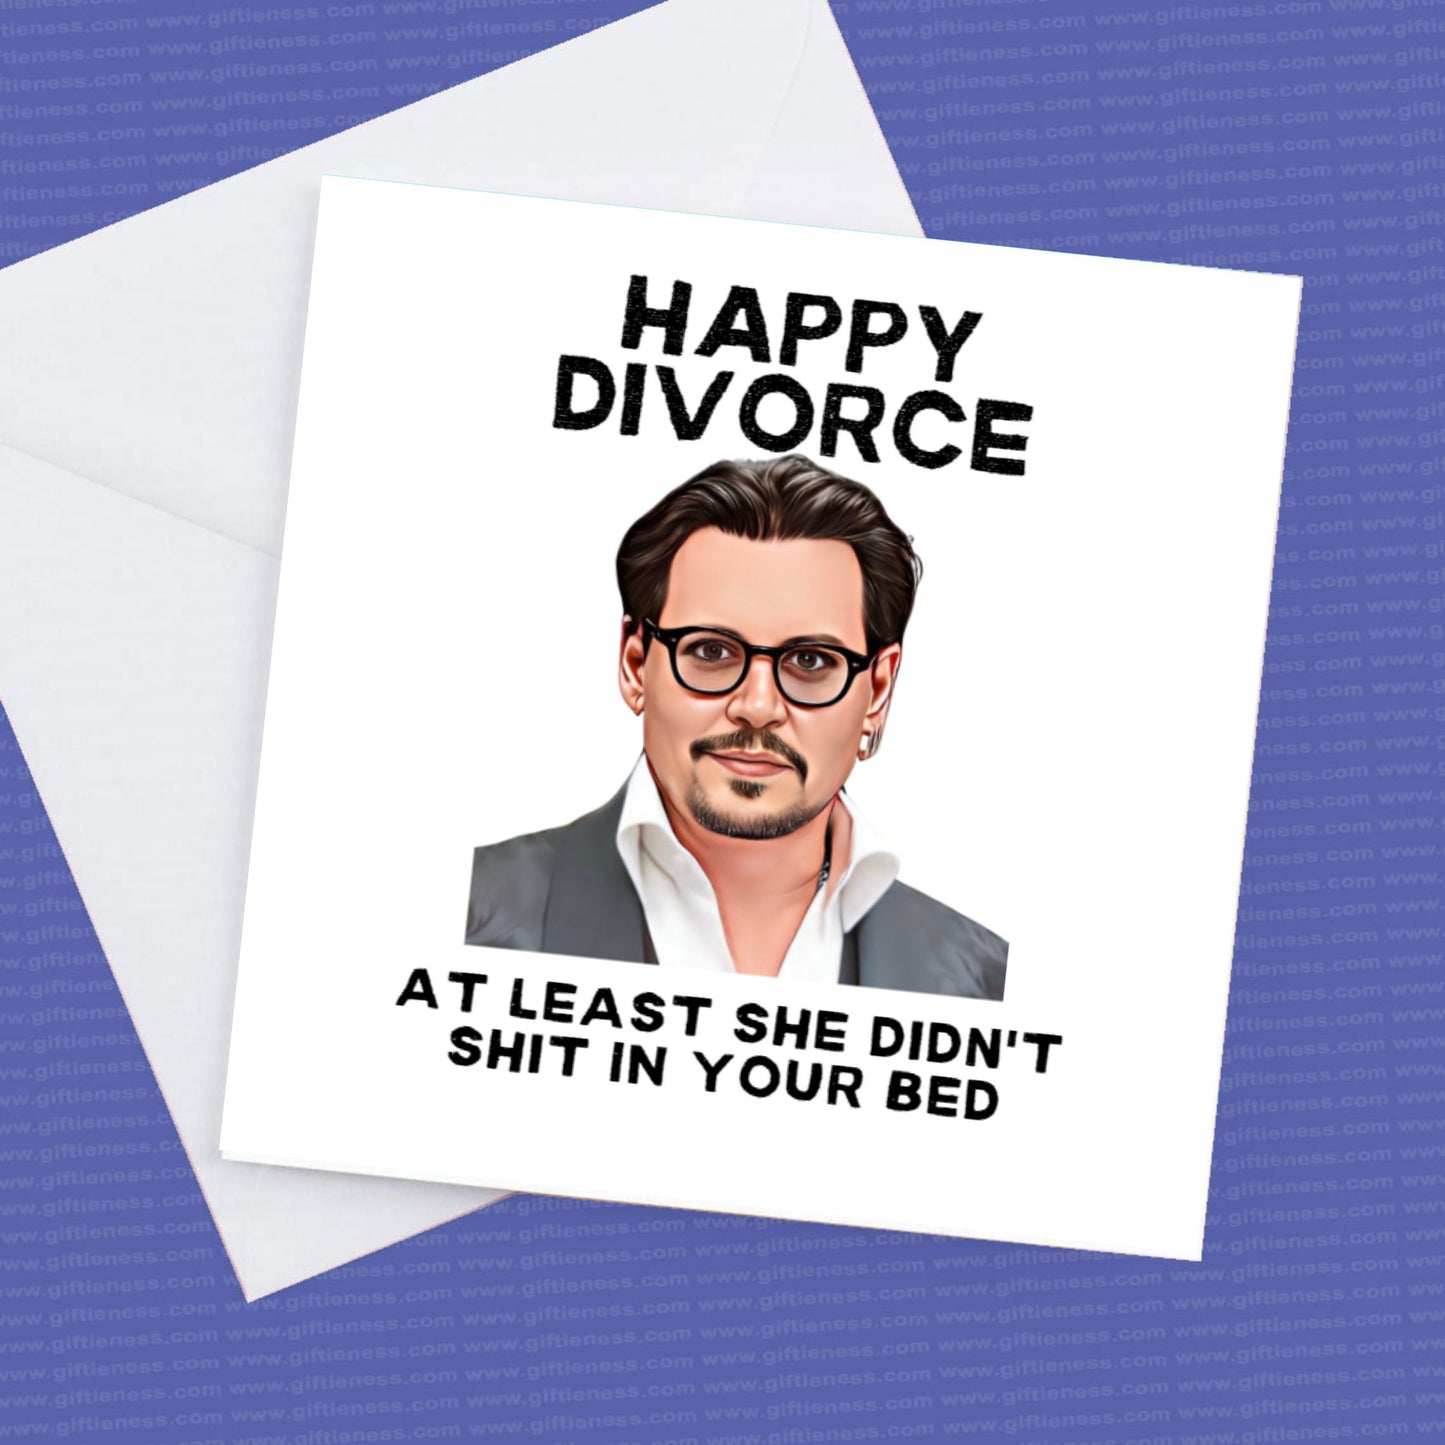 Happy Divorce Johnny Depp Card, At Least She Didn't Shit In Your Bed Johnny Depp Divorce Card, Johnny Depp Fun Card